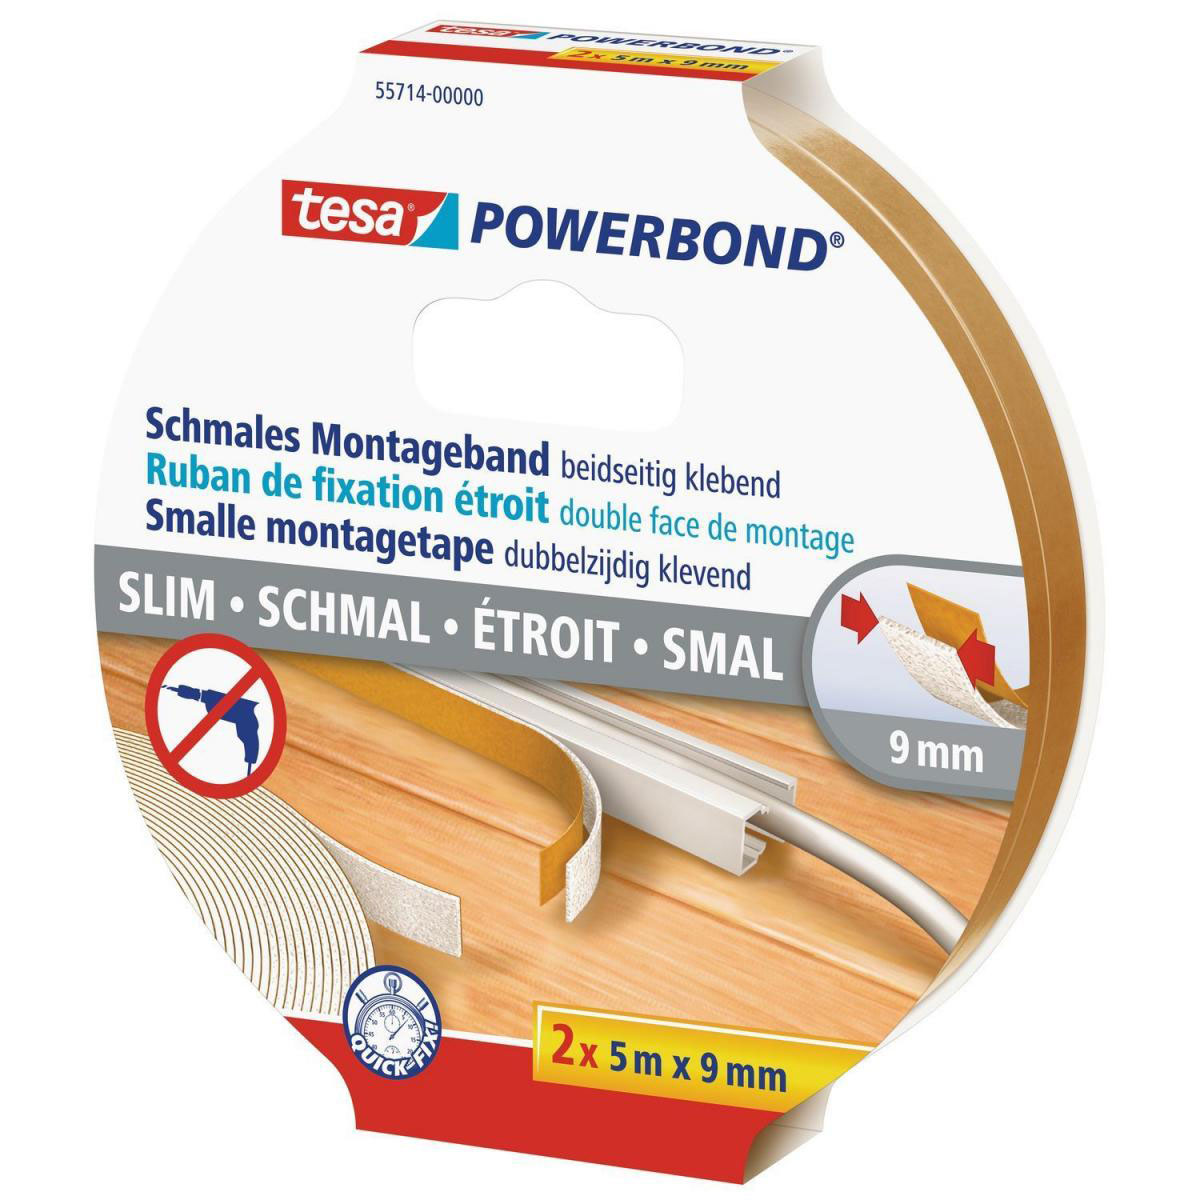 „Powerbond“ Montageband, 2x5mx9mm